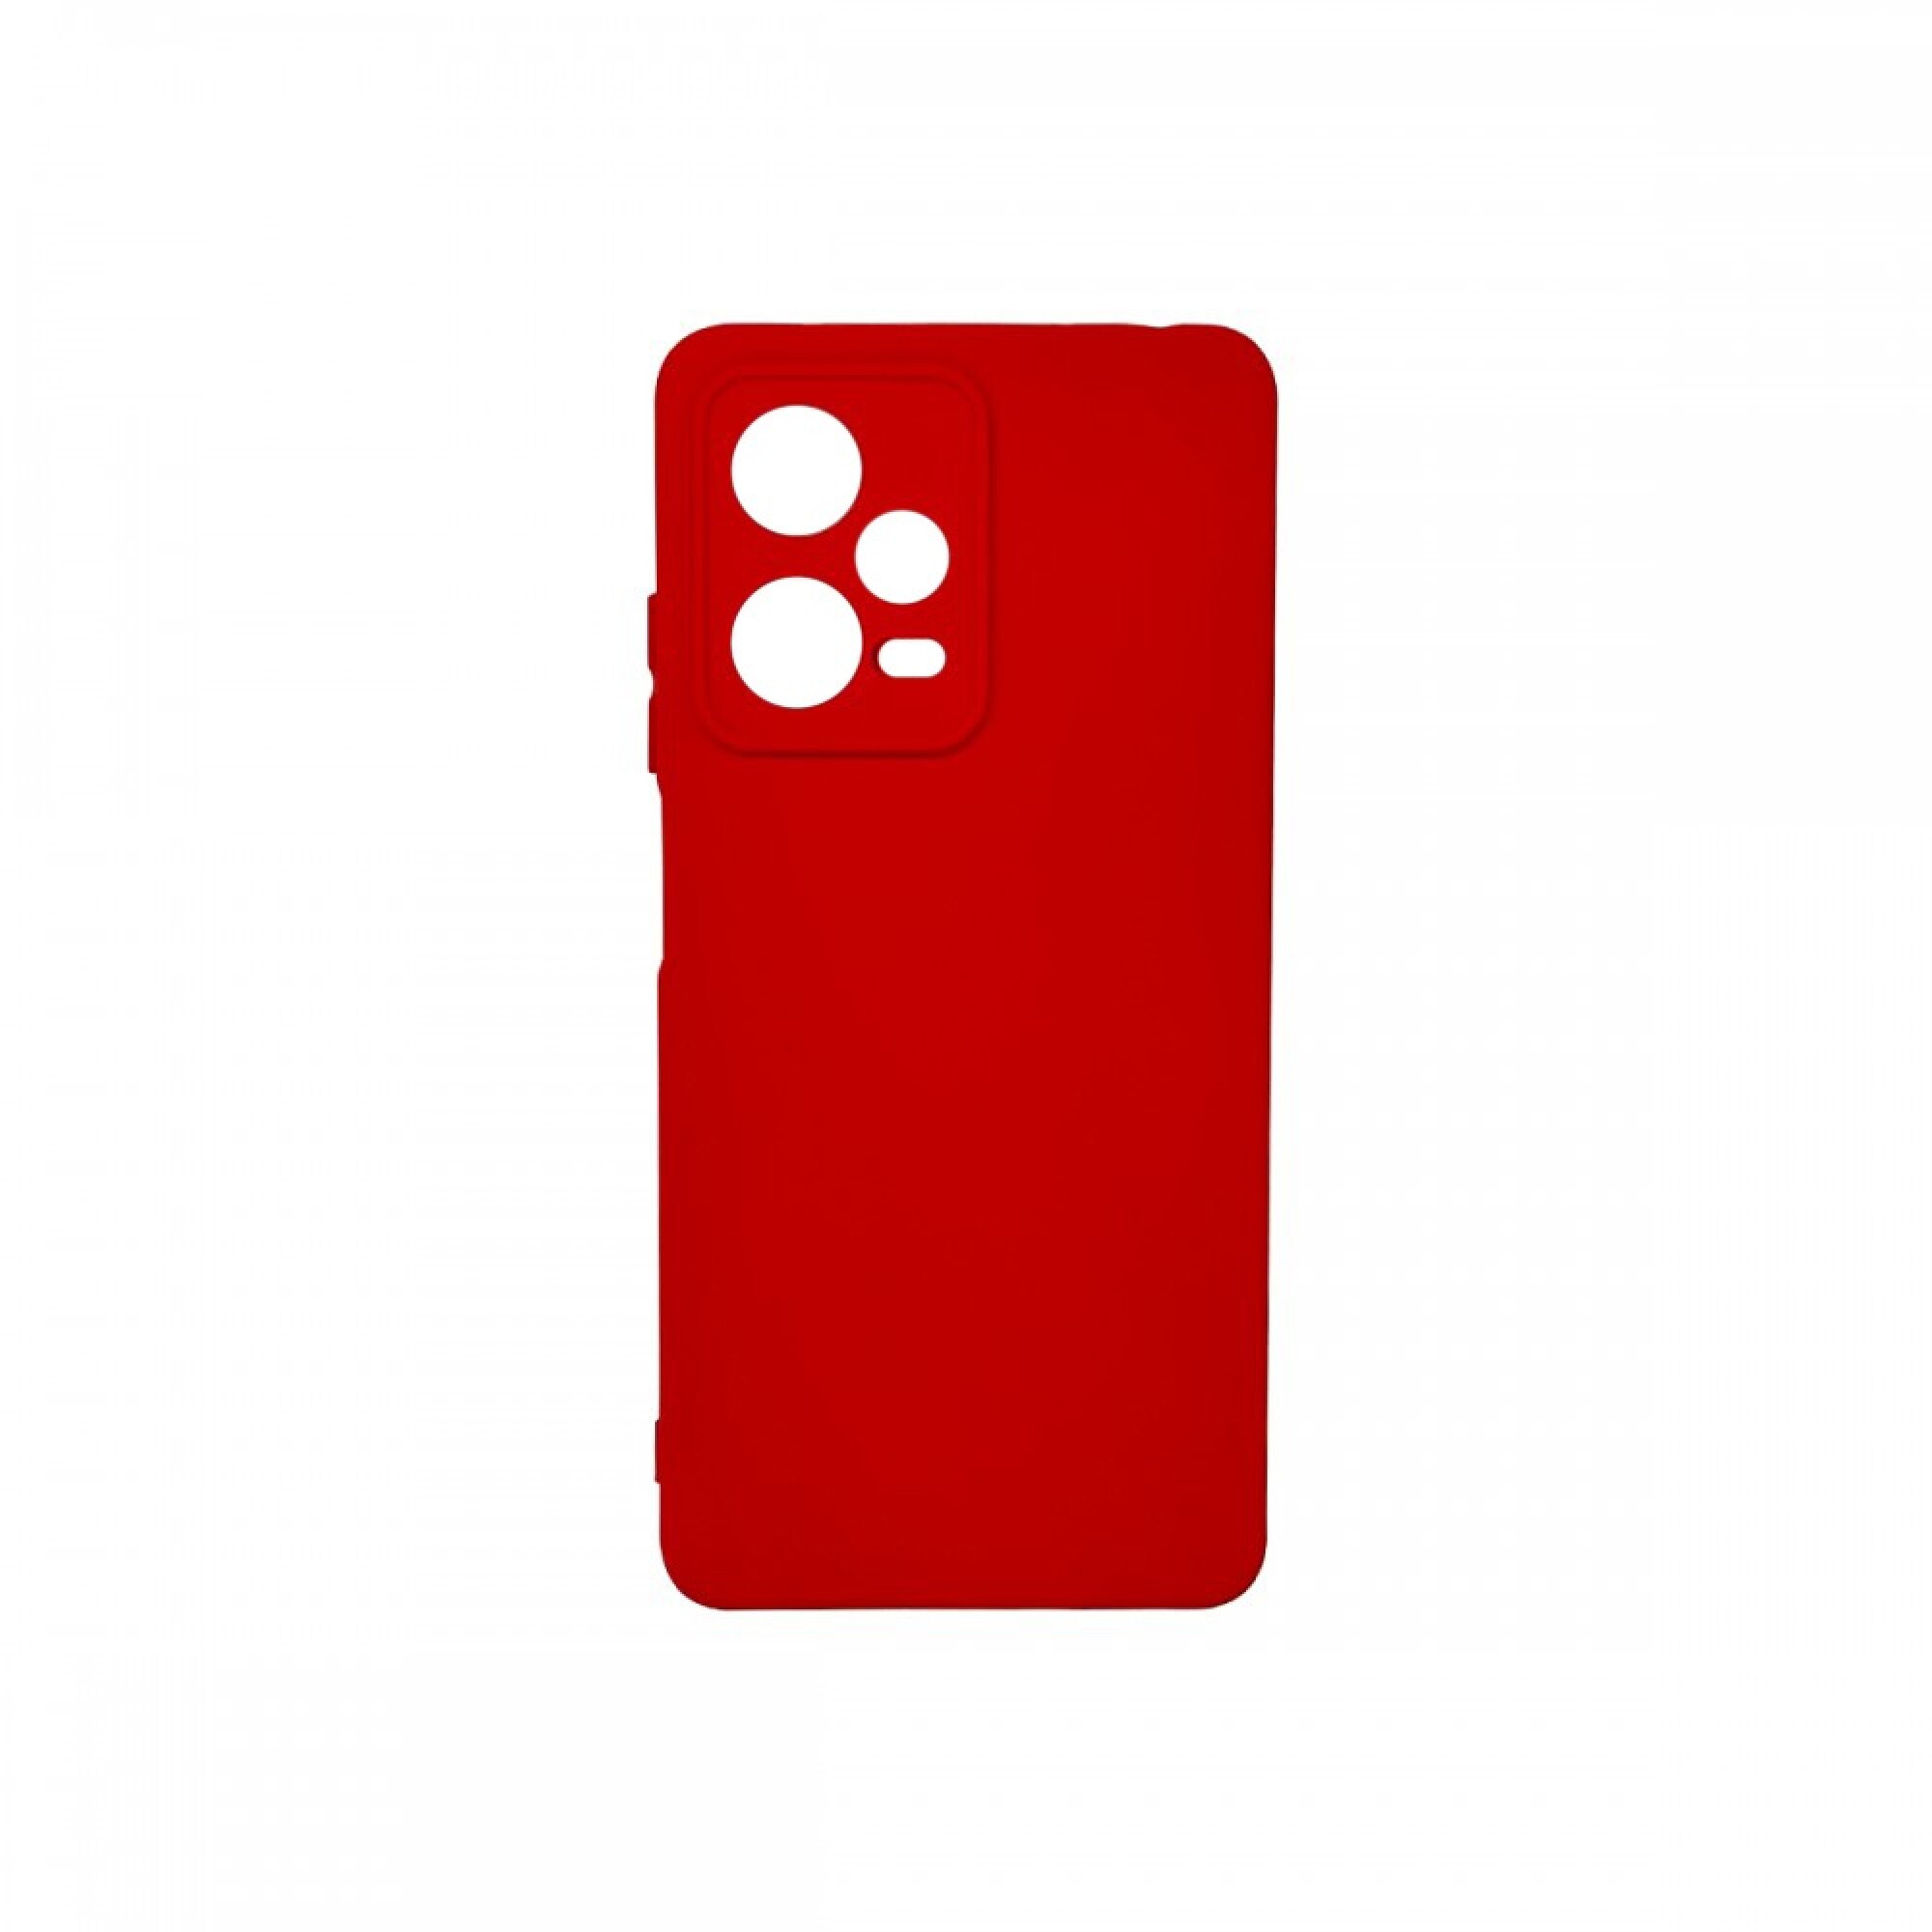 Cool Carcasa Cover Roja para Xiaomi Redmi Note 12 Pro Plus 5G